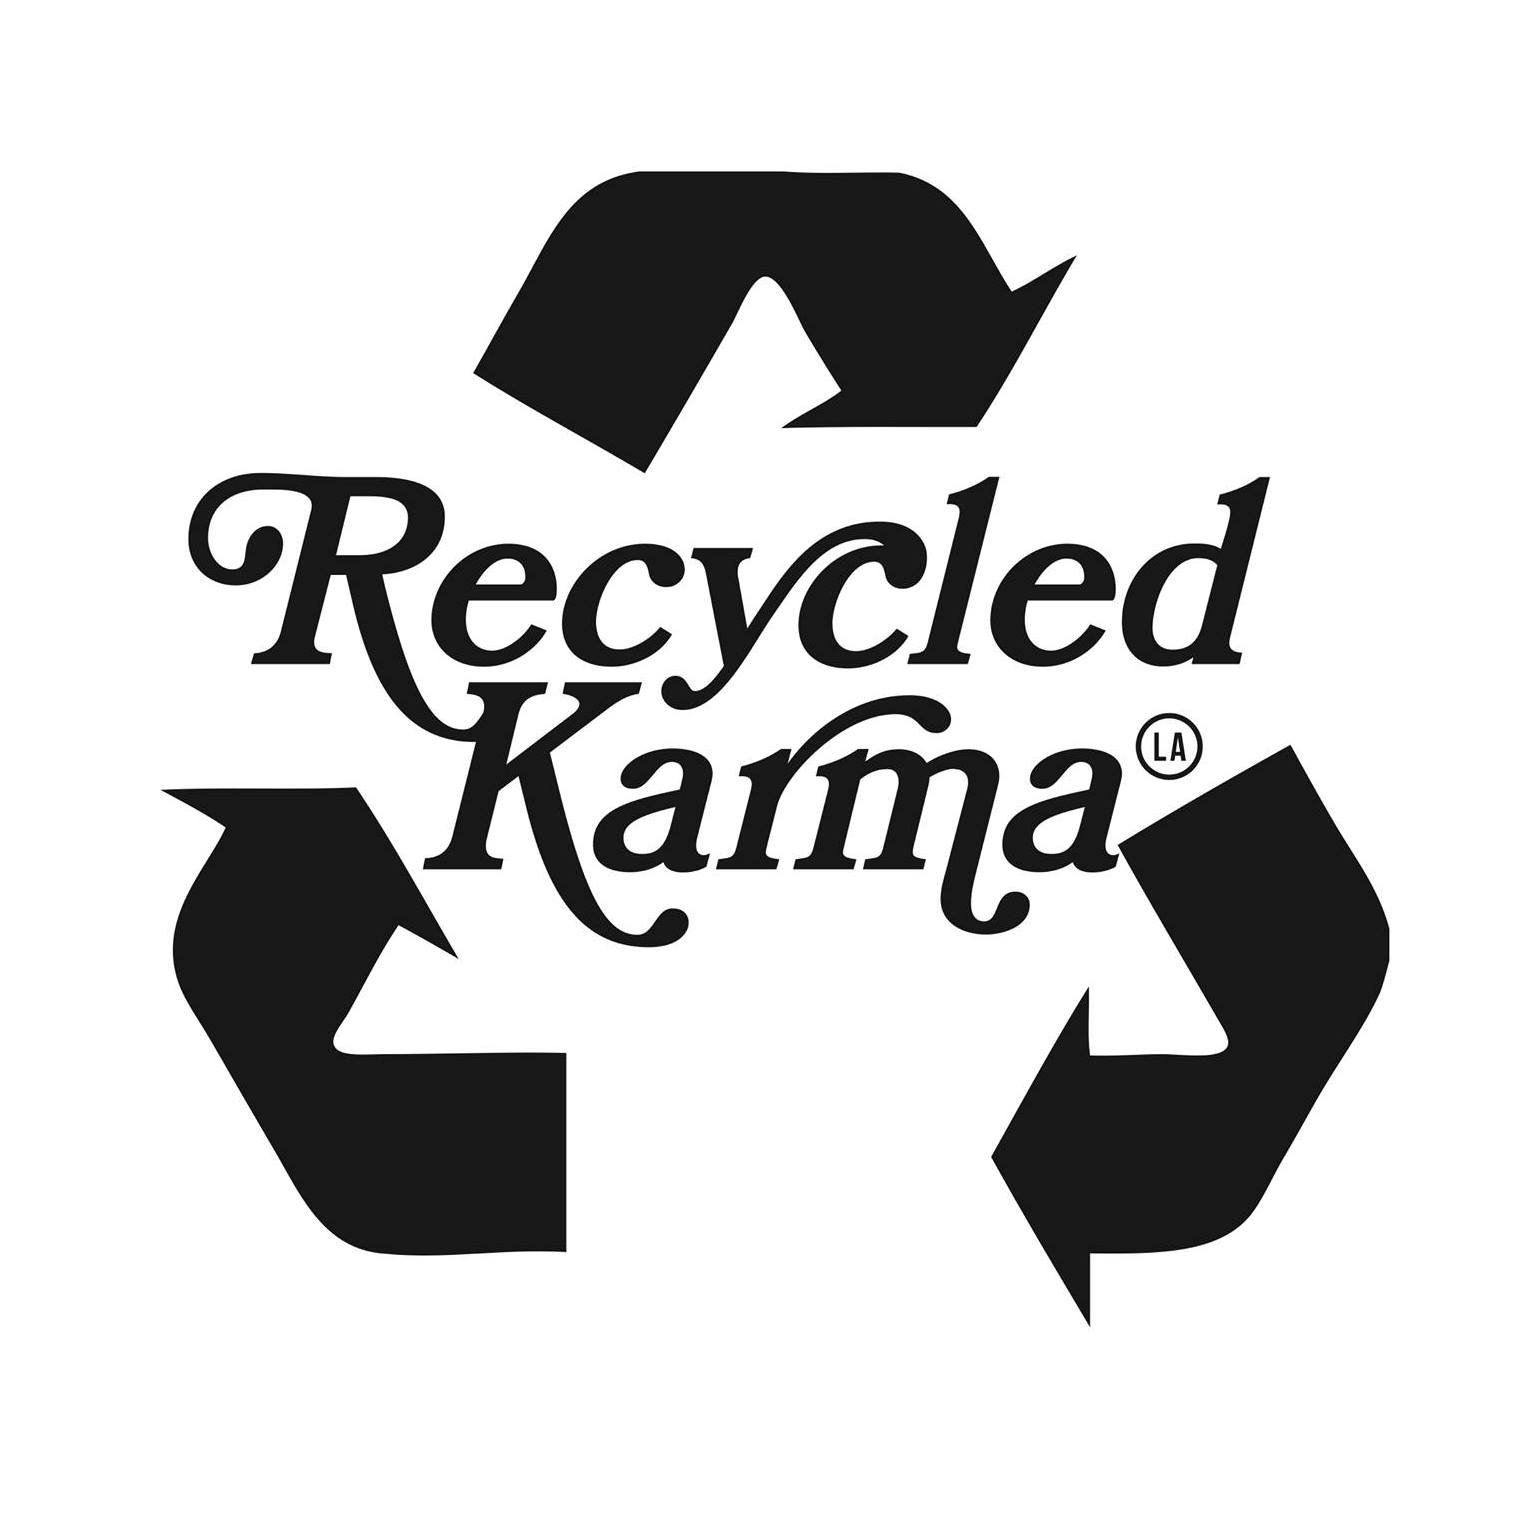 Recycled Karma Size charts